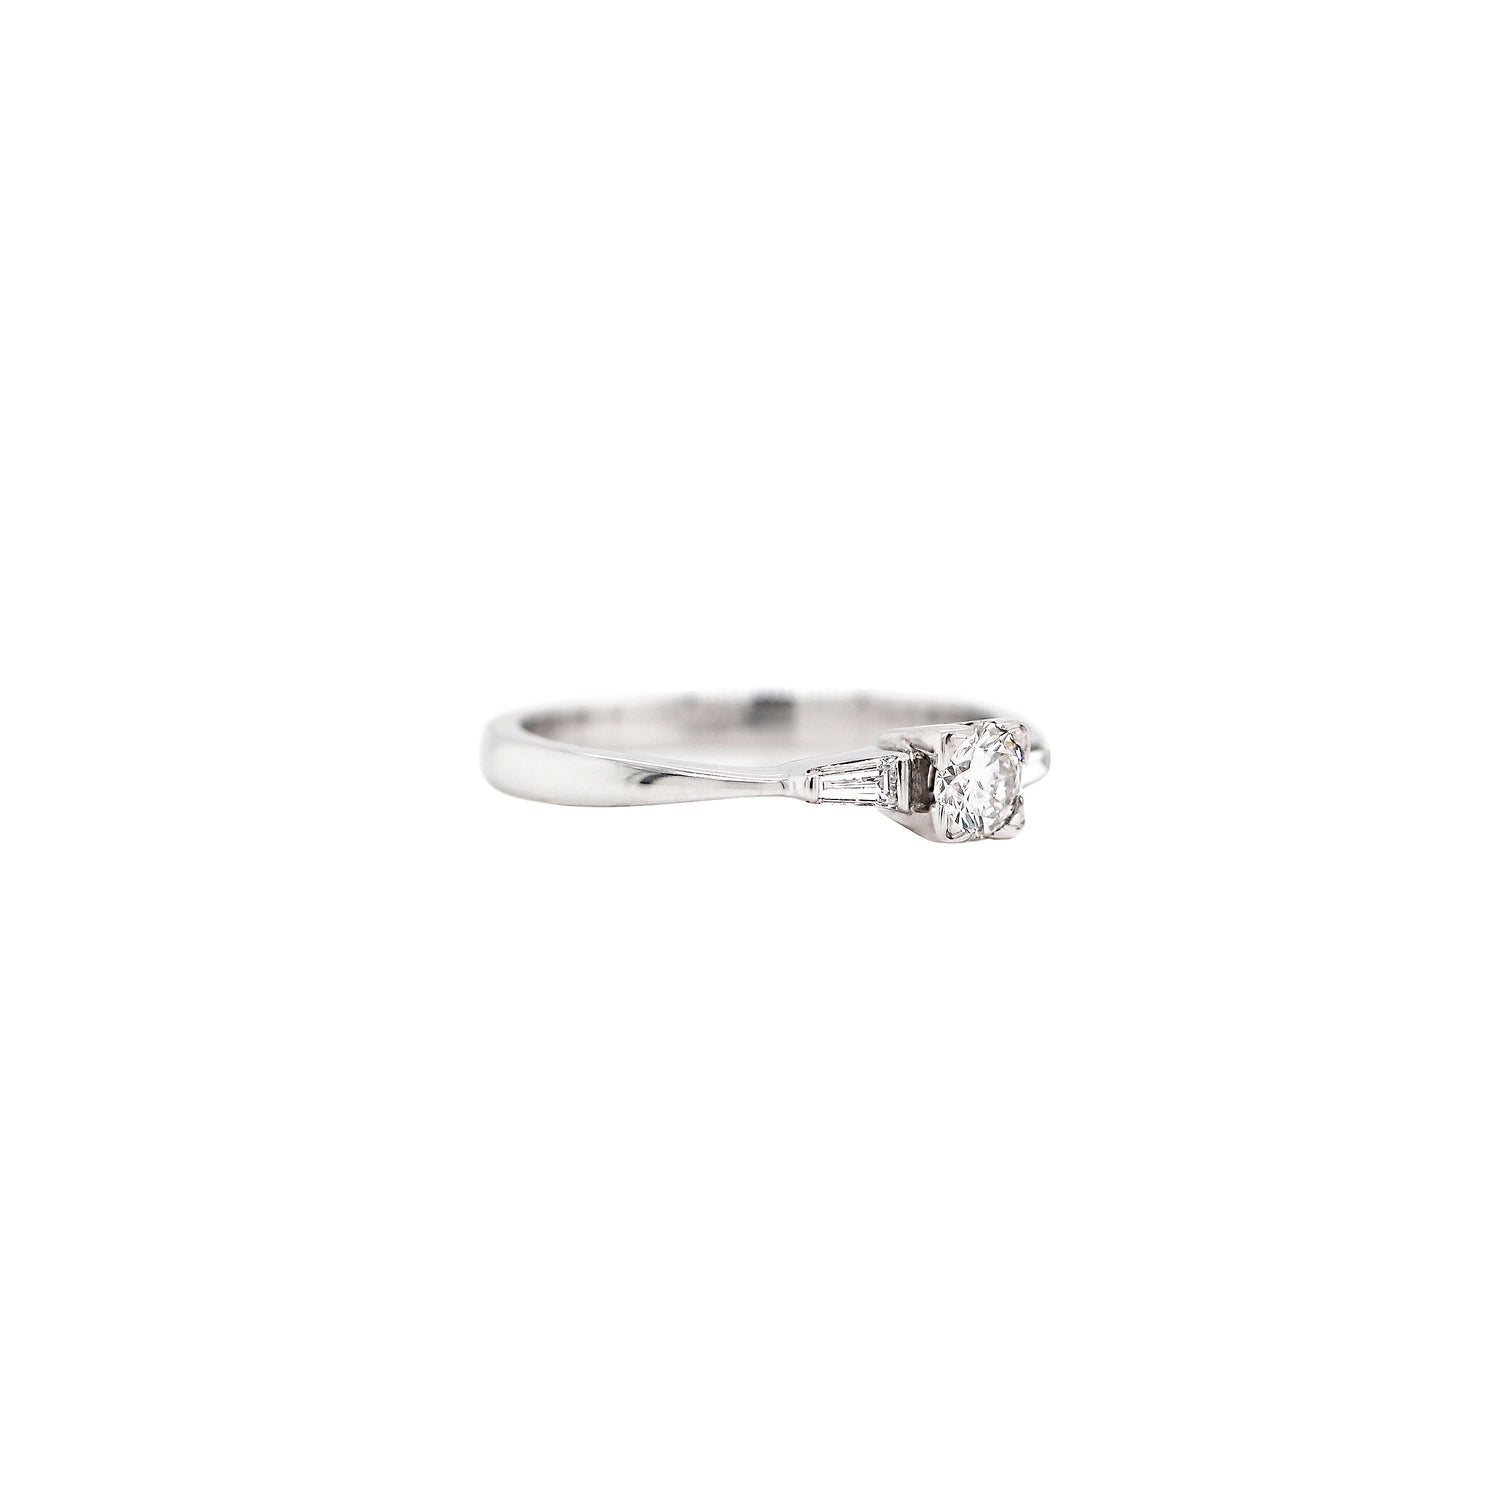 Art Deco Style 0.30 Carat Diamond 18 Carat White Gold Ring, Circa 1970s